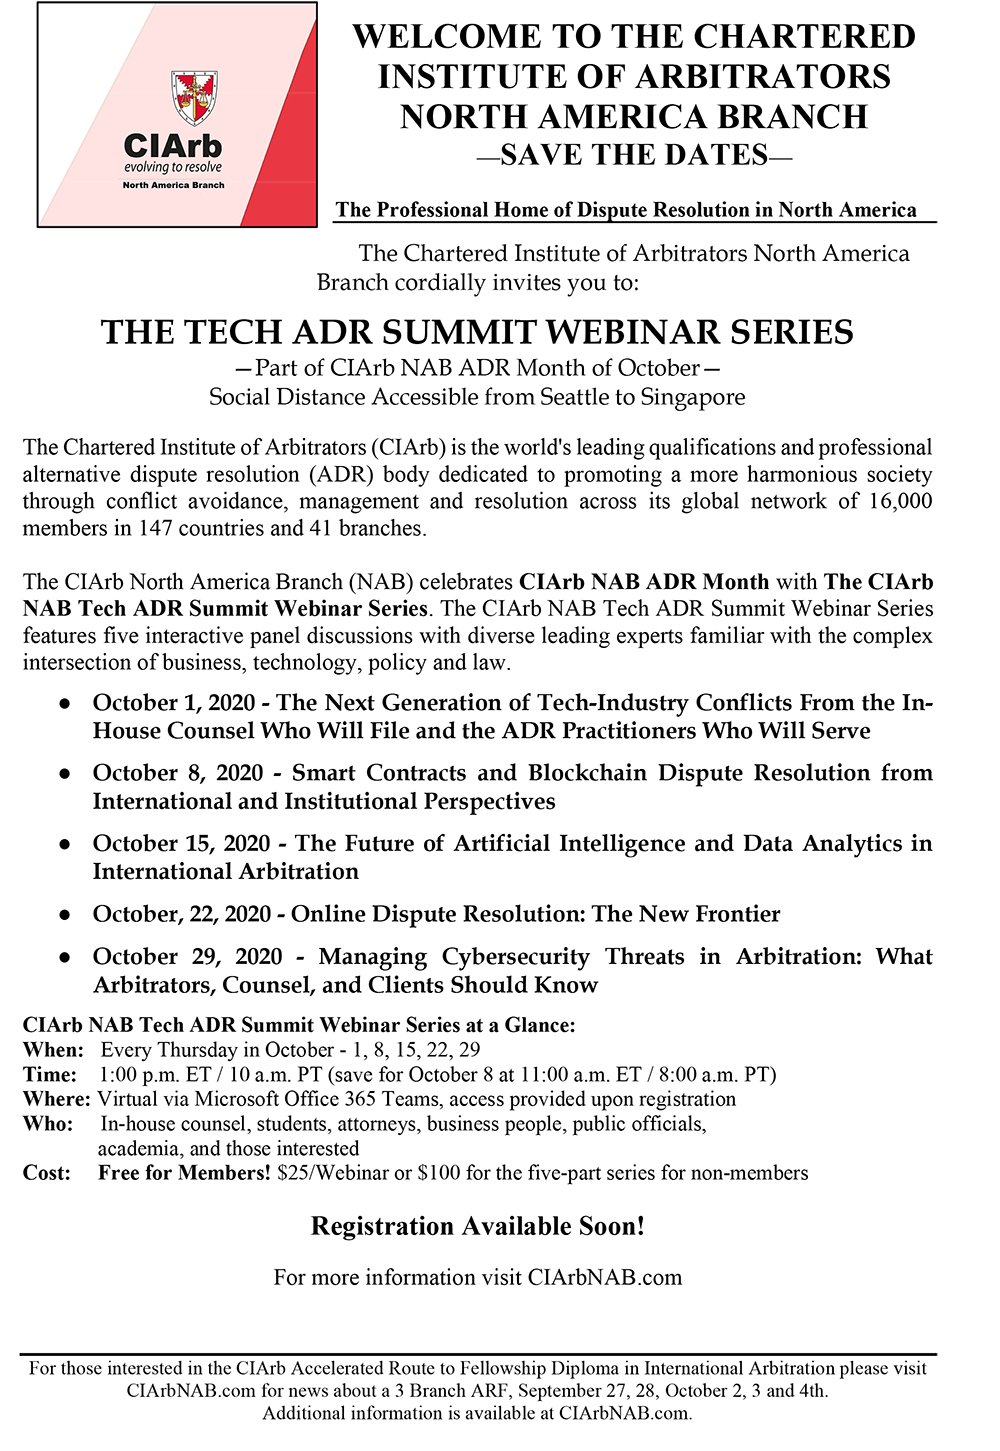 CIArb-NAB-Tech-ADR-Summit-Webinar-Series-Invitation-Revised